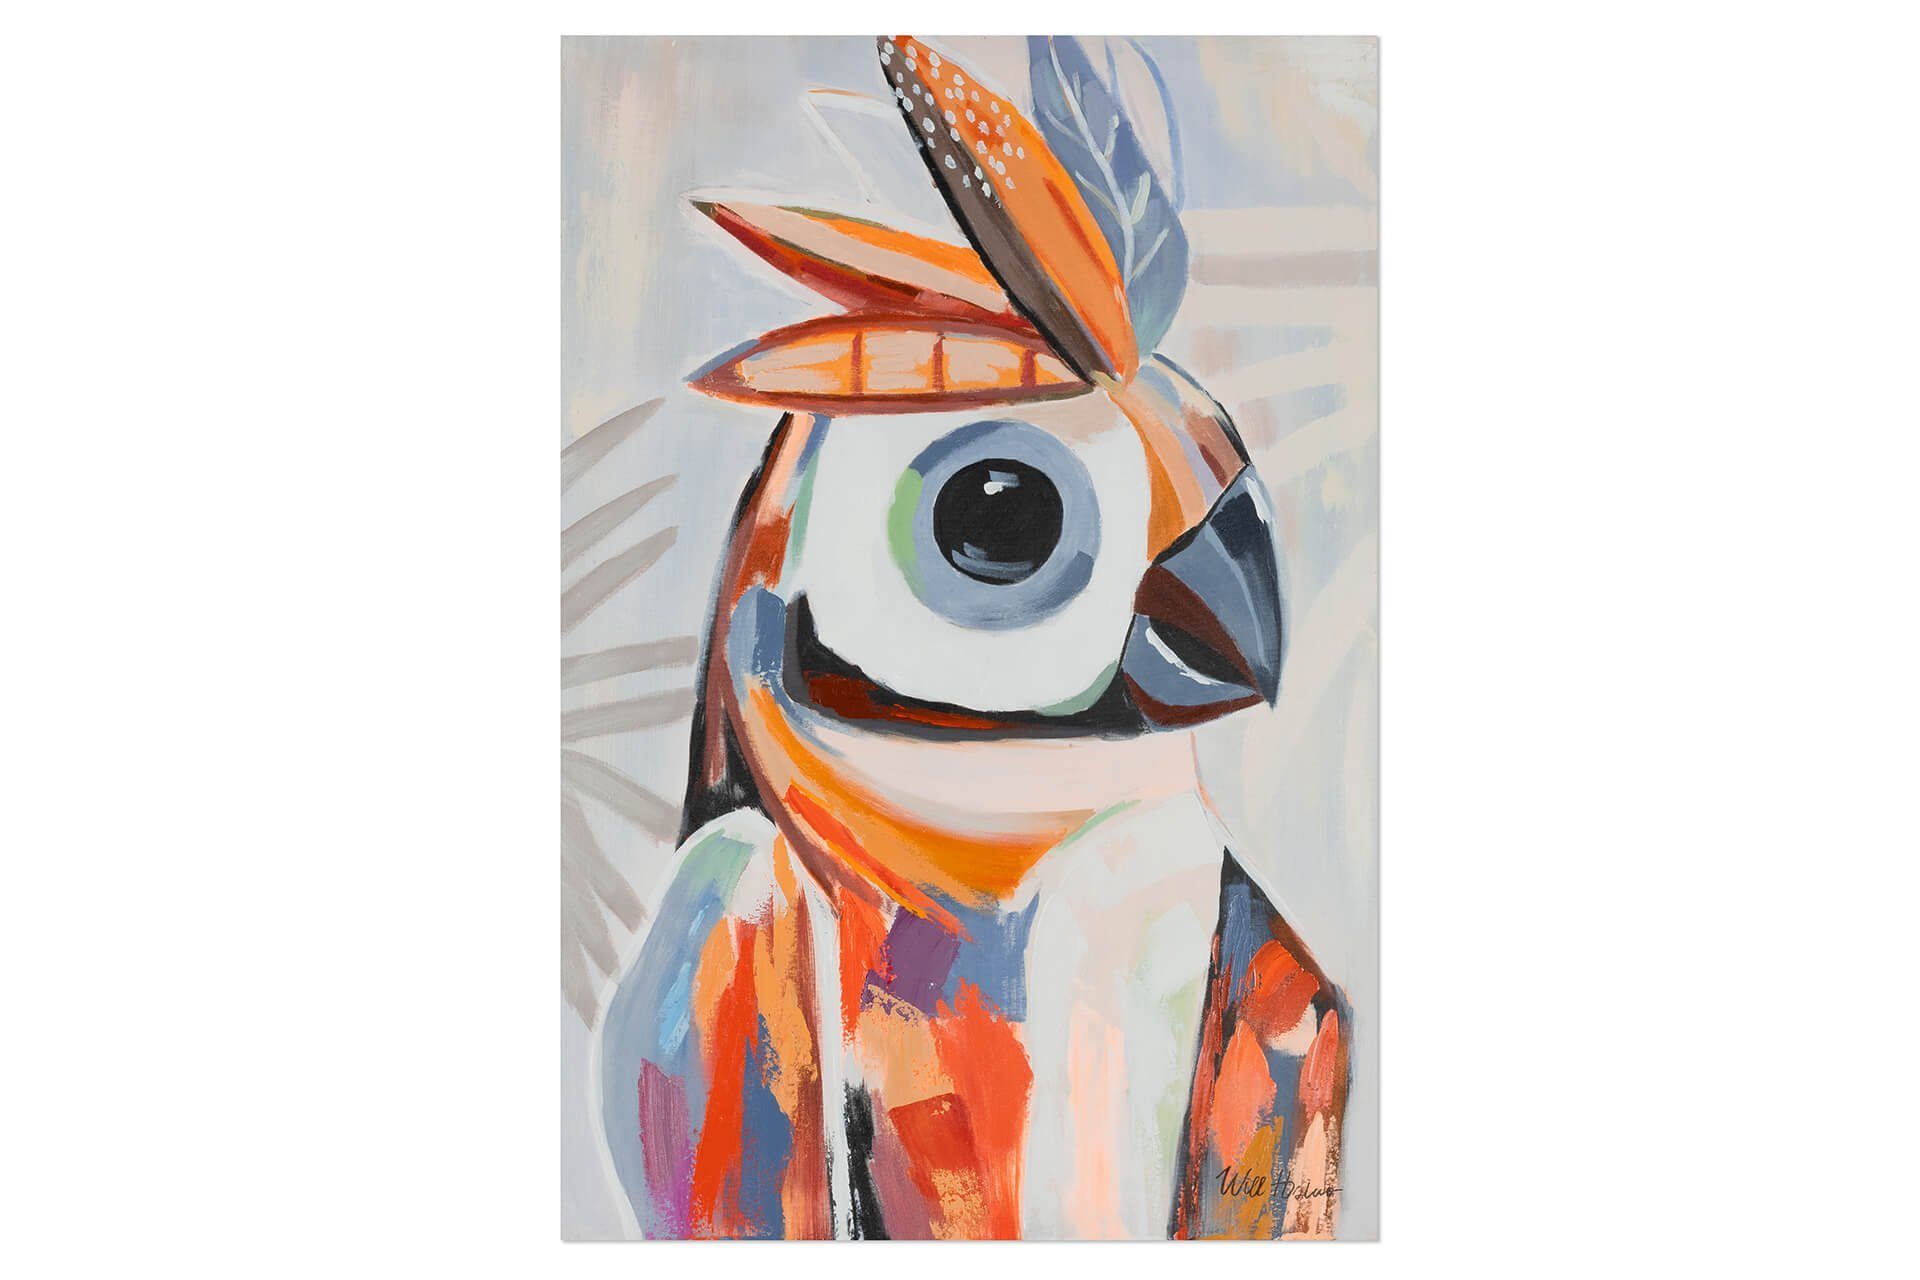 Indigenous Wohnzimmer cm, Leinwandbild HANDGEMALT 100% KUNSTLOFT Bird Wandbild Gemälde 60x90